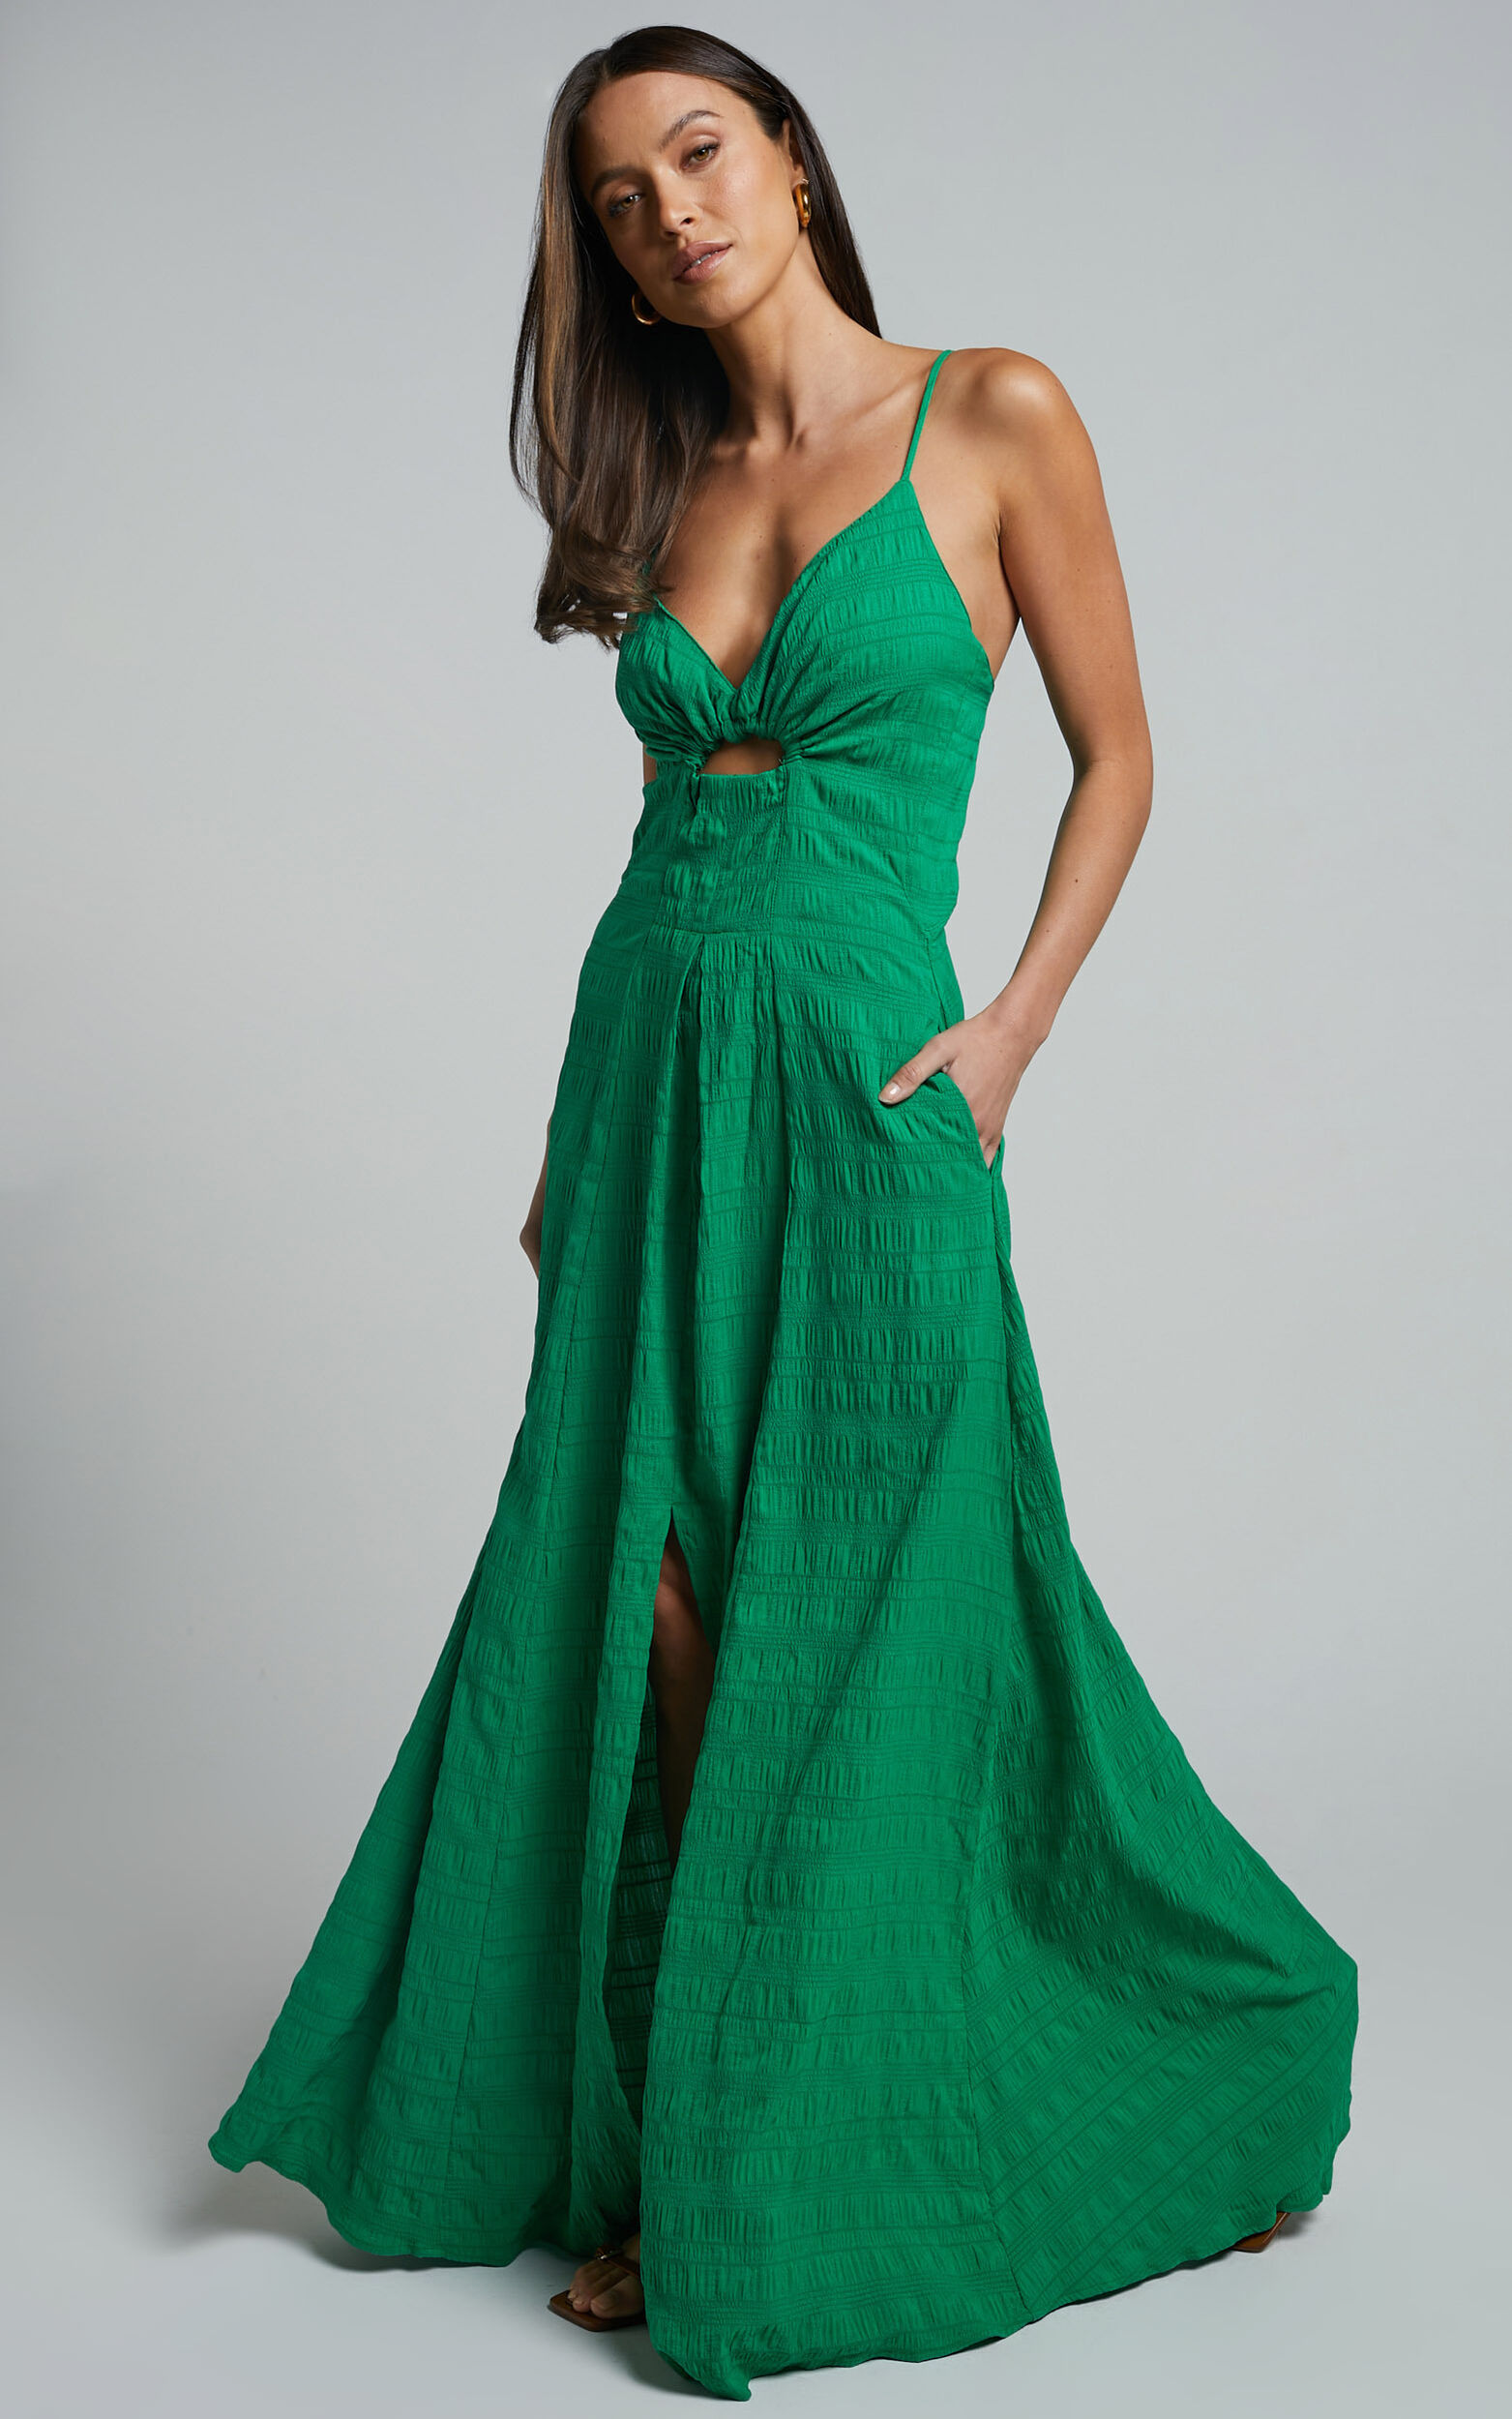 Marisse Maxi Dress - Cut Out Front Split Cross Back Textured Dress in Green - 06, GRN5